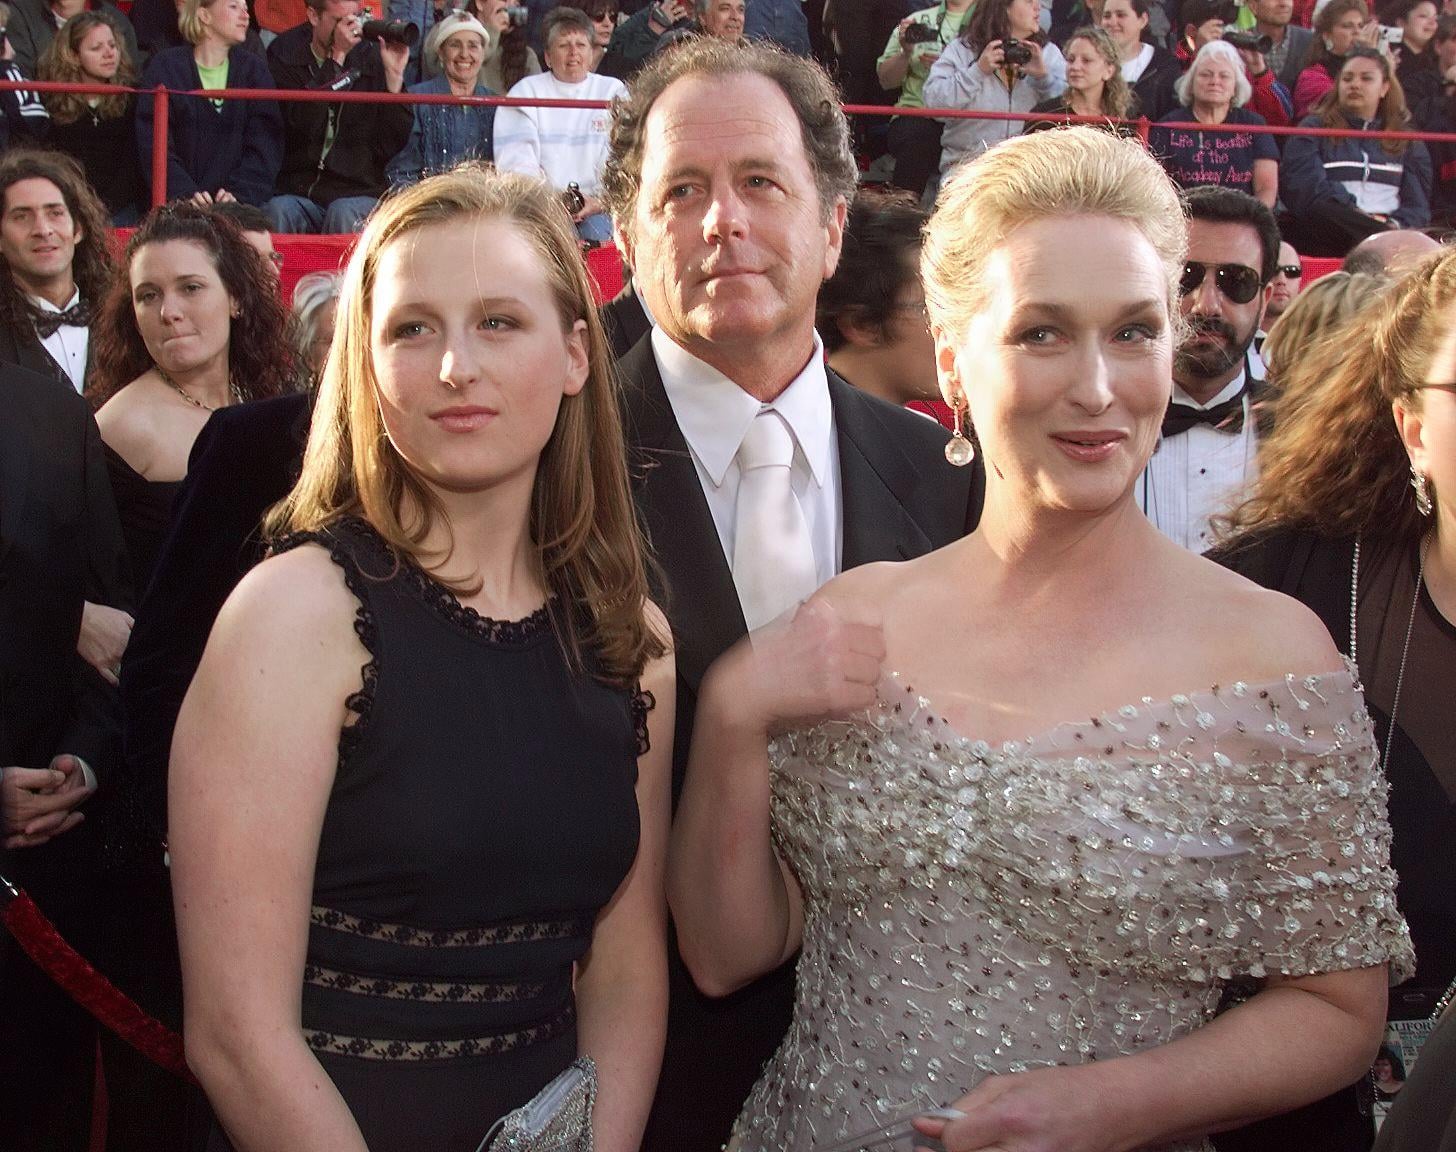 Meryl Streep And Don Gummer S Family Pictures Popsugar Celebrity